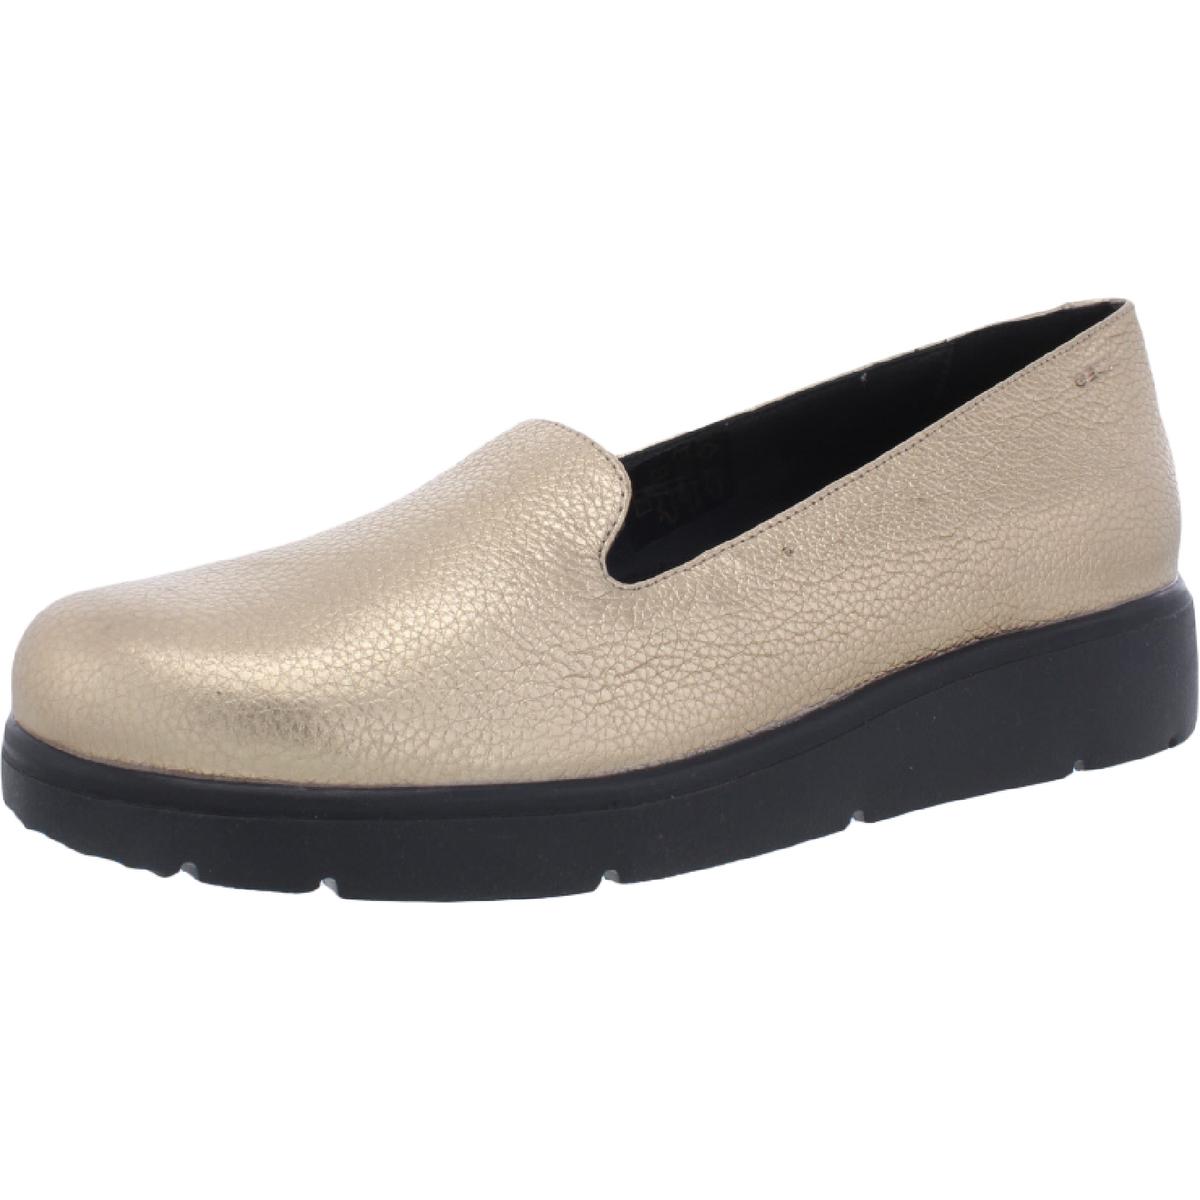 Geox Respira Womens D Arlara Leather Wedges Slip-On Shoes Shoes BHFO 0072 |  eBay